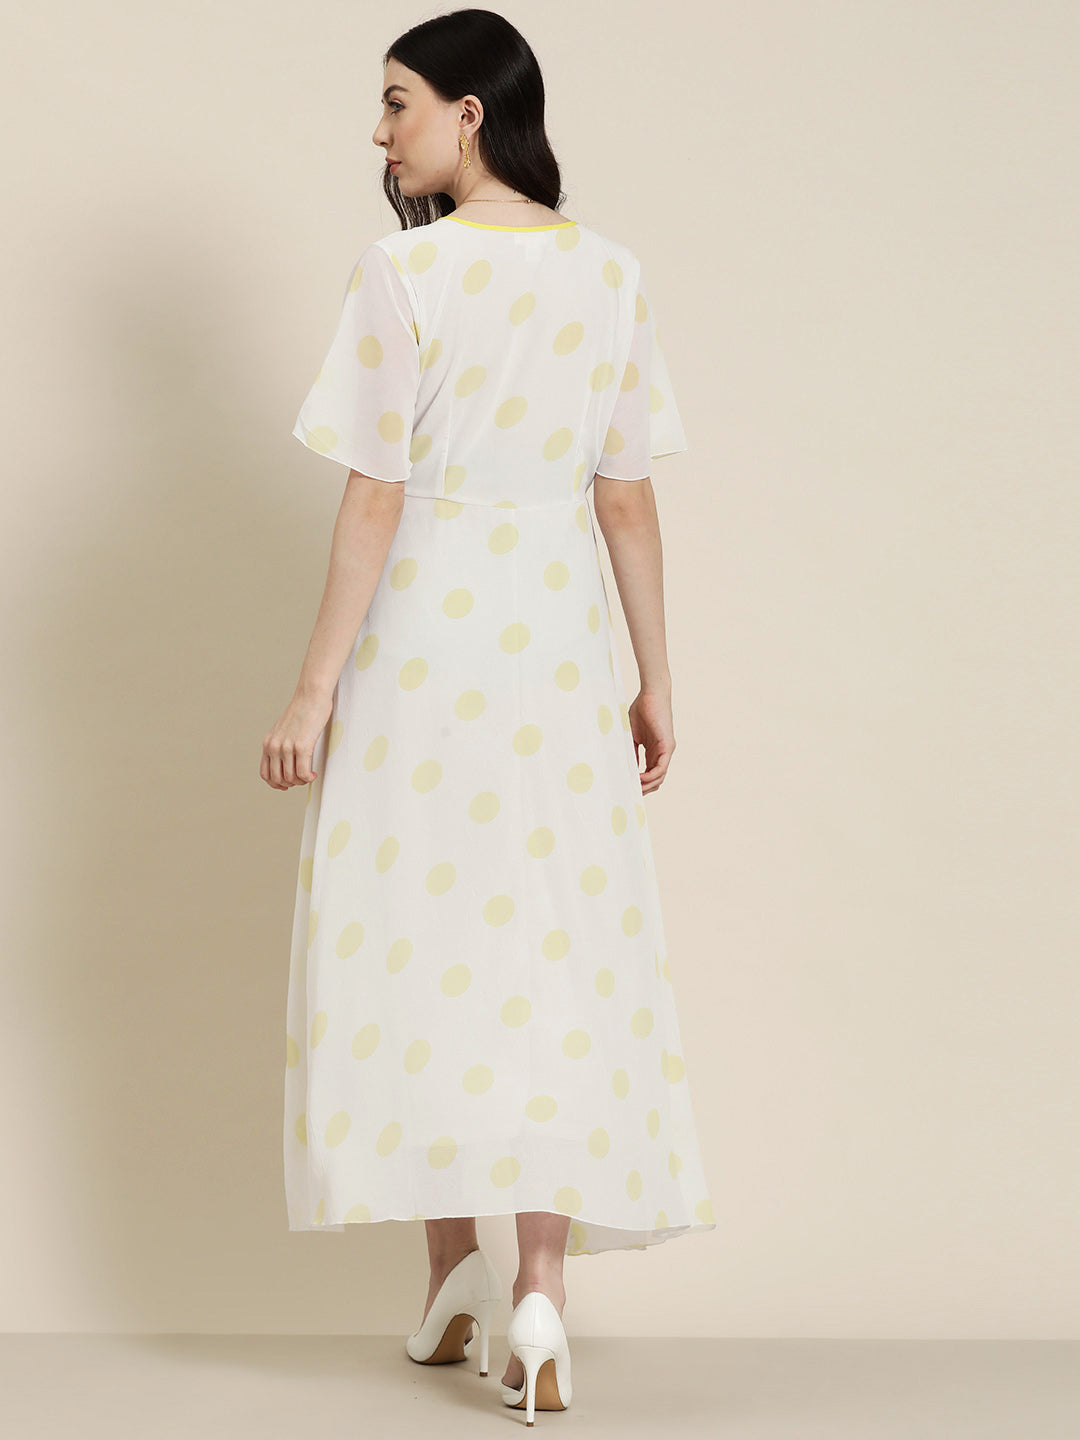 White with big yellow polka summer dress